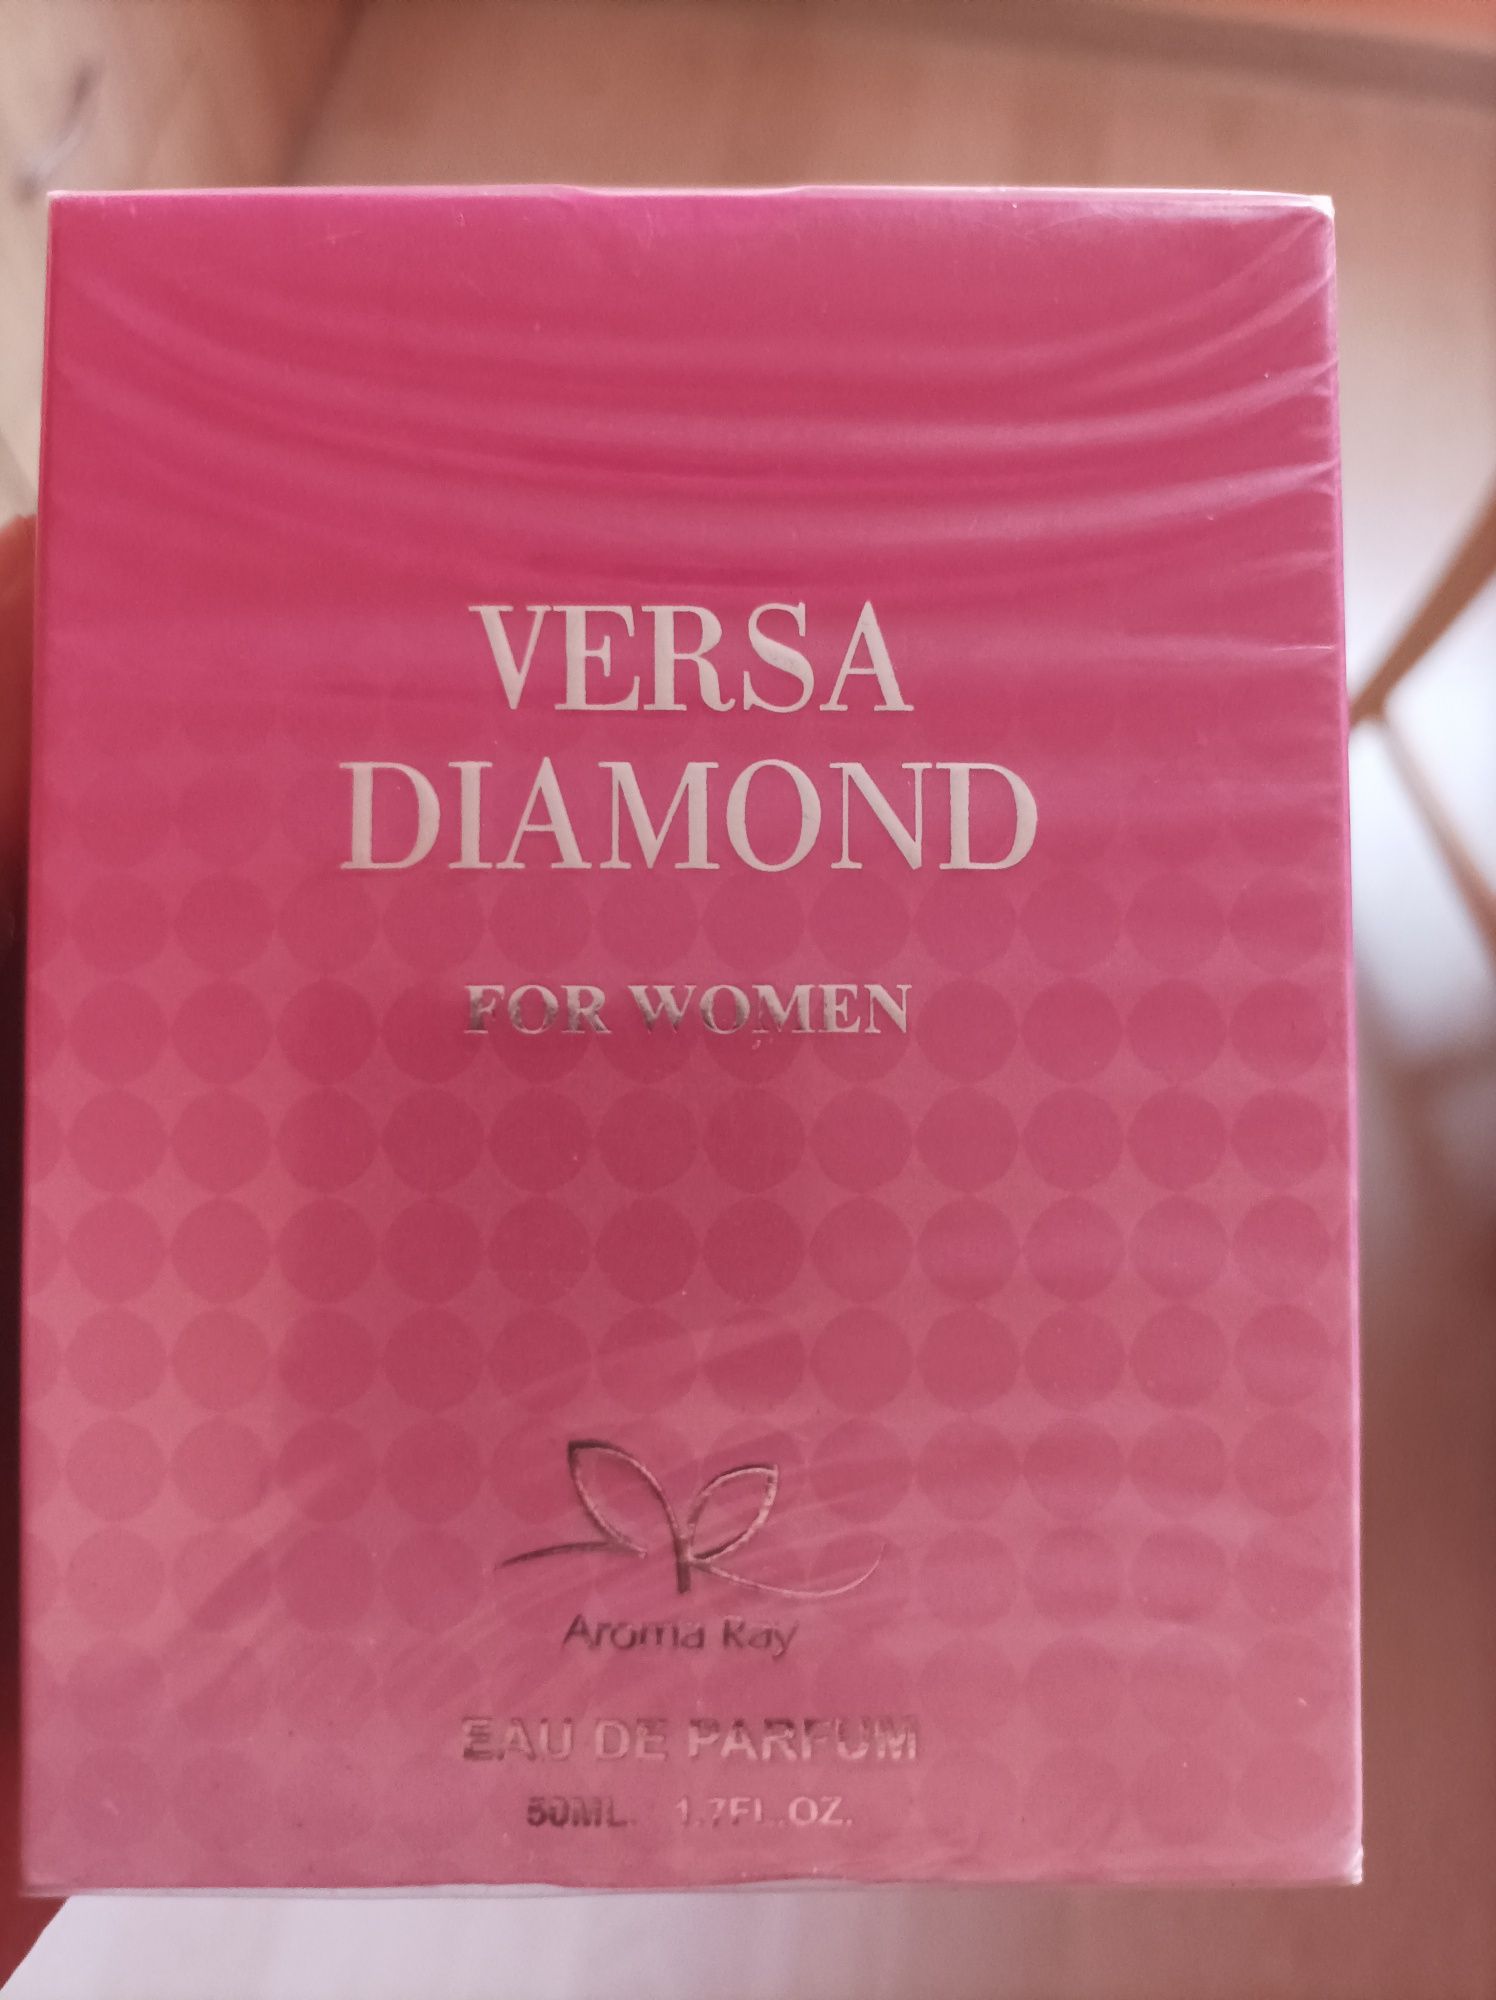 Пърфюм versace diamond